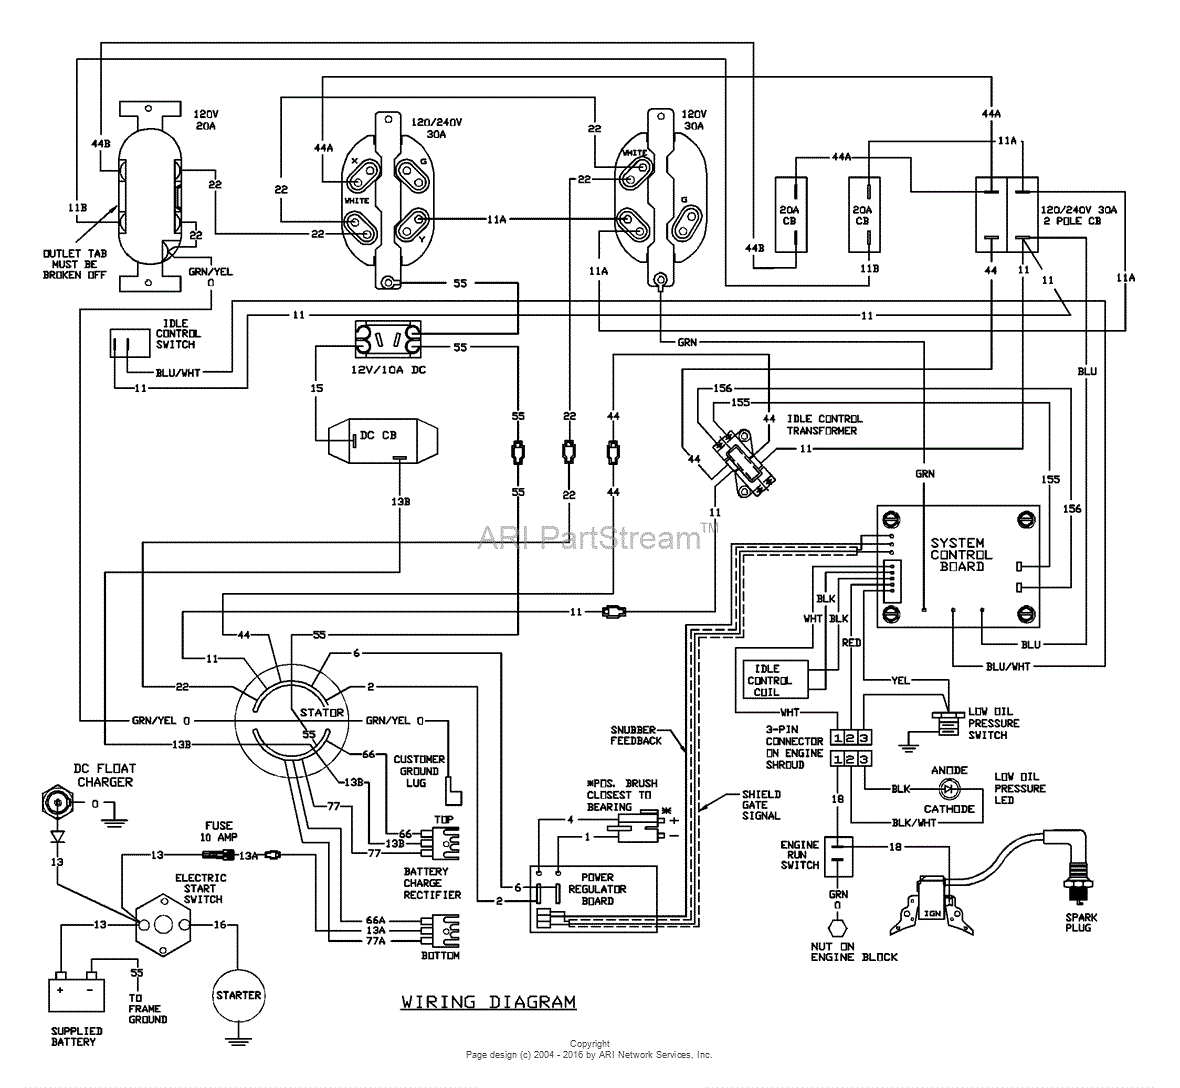 need wiring diagram for generac gp7000e portable generator